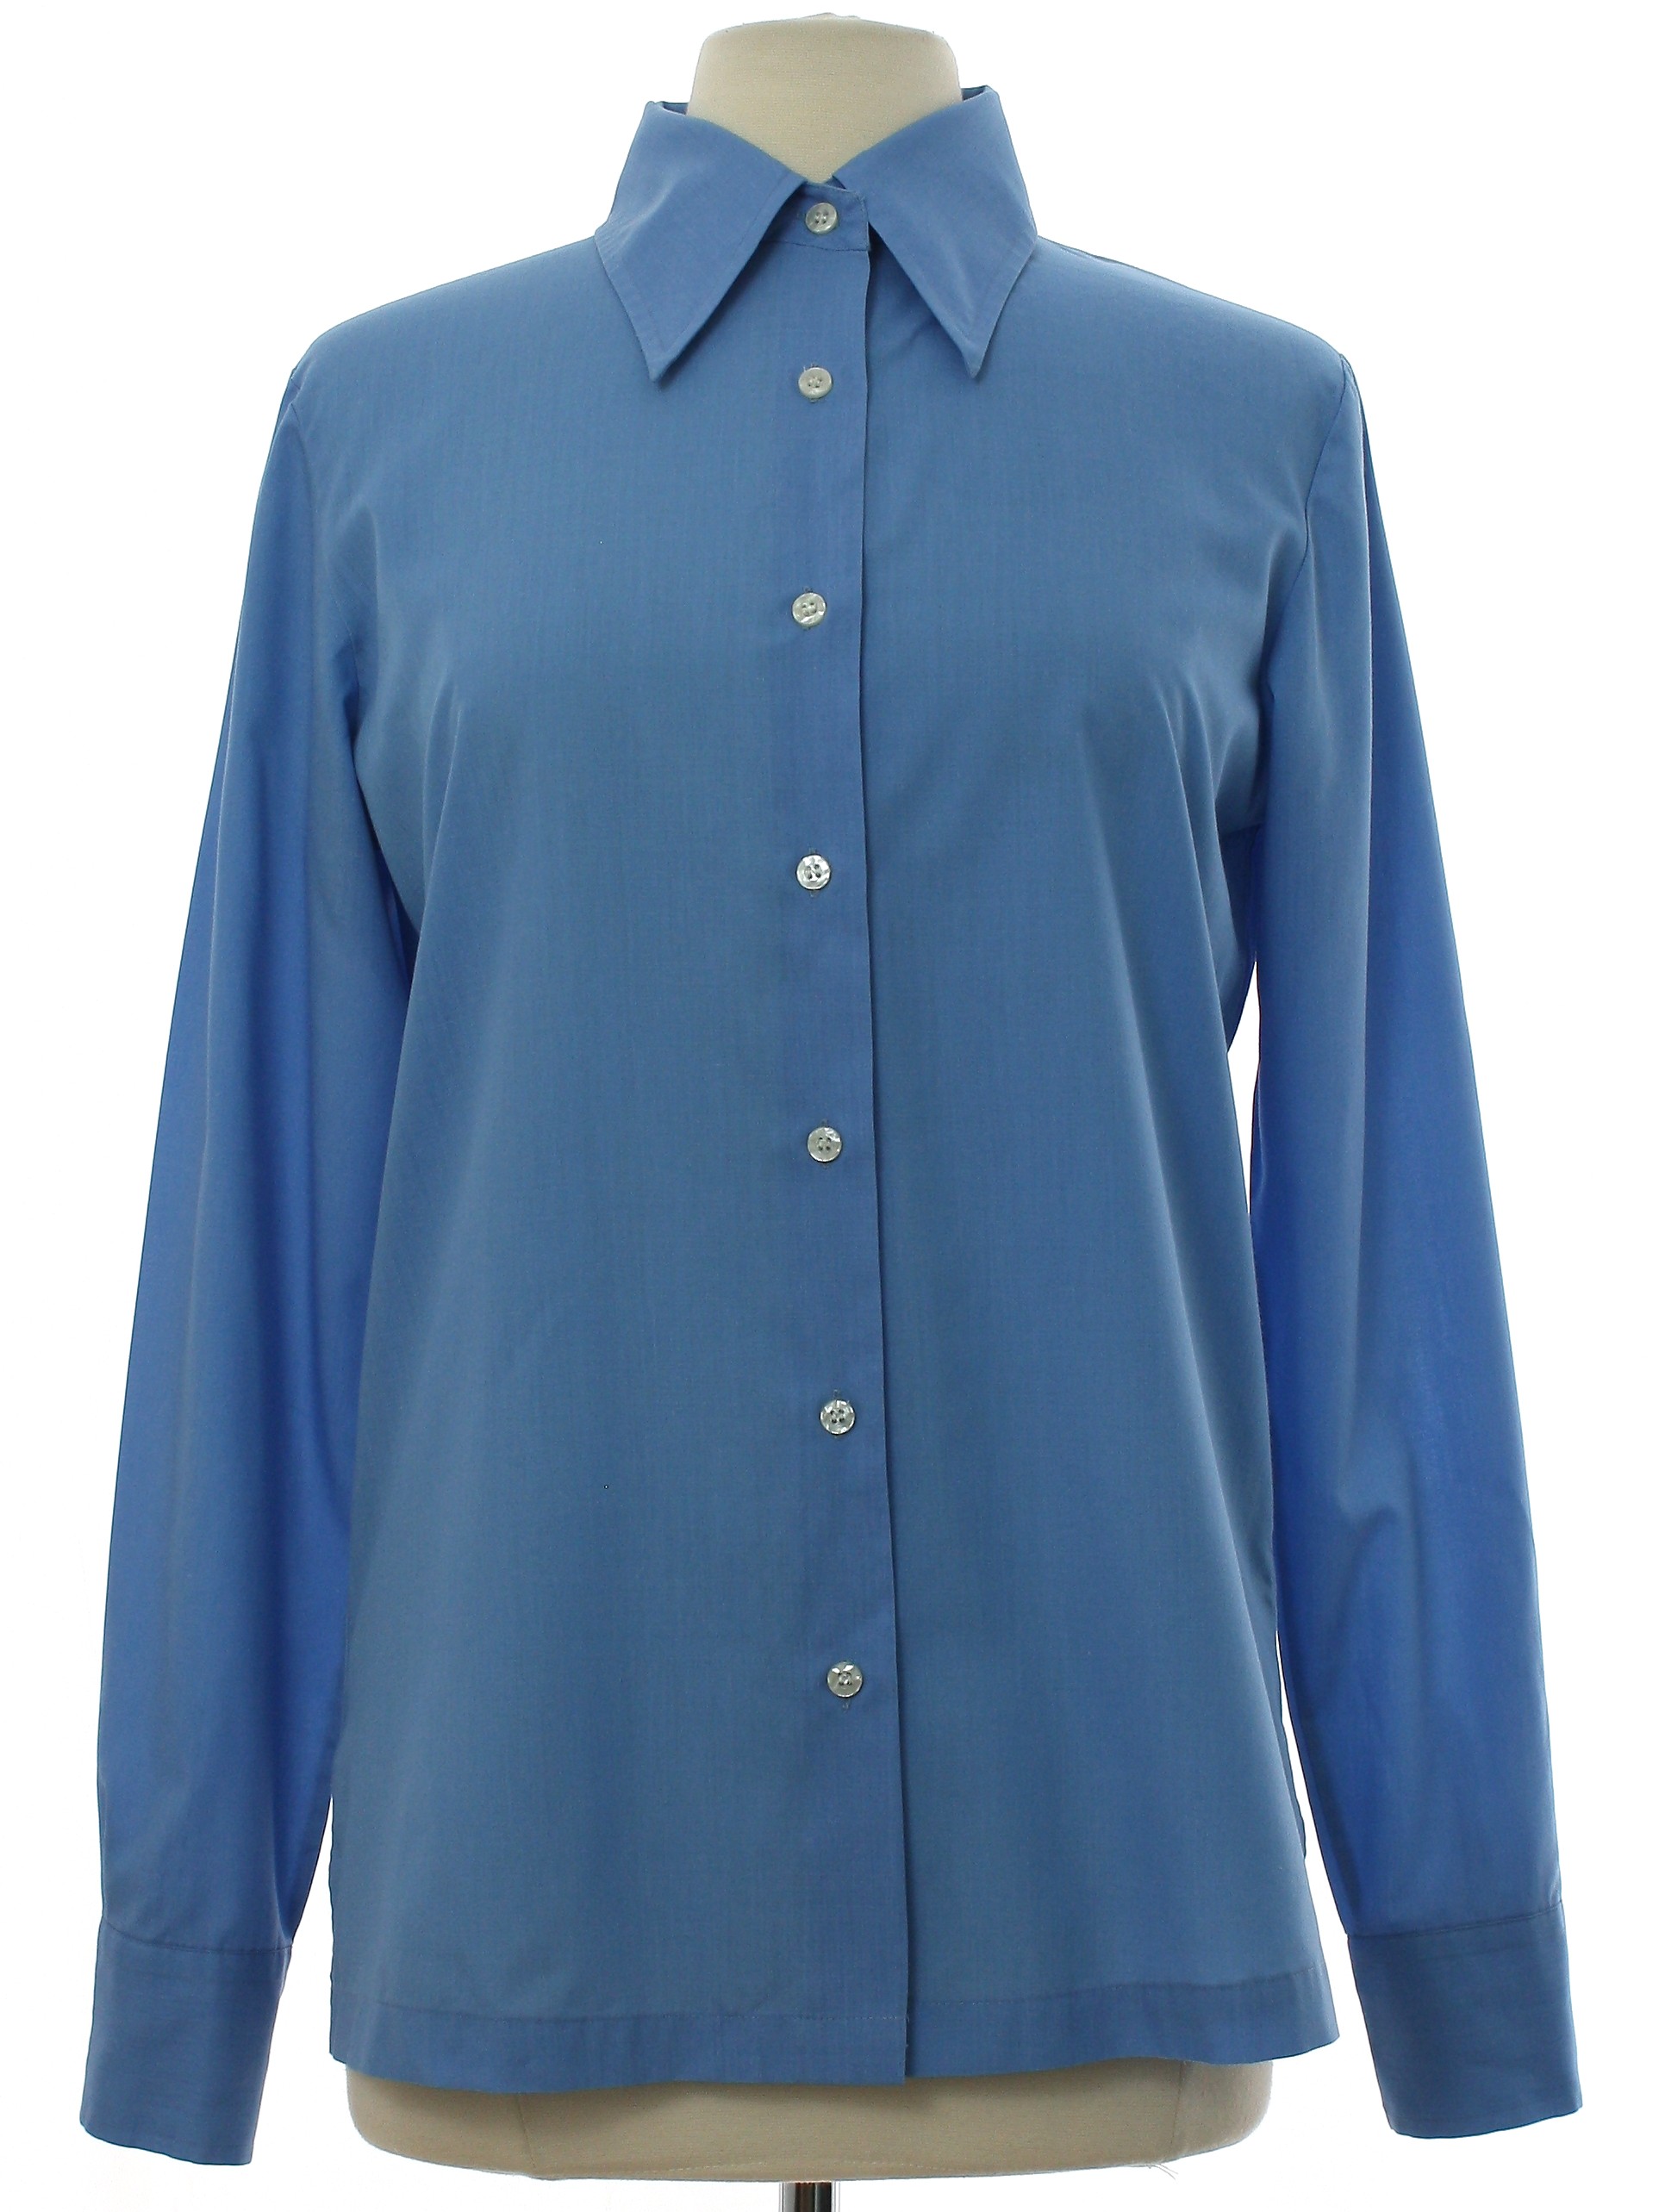 Retro 1970's Shirt (Lane Bryant) : 70s -Lane Bryant- Womens light blue ...